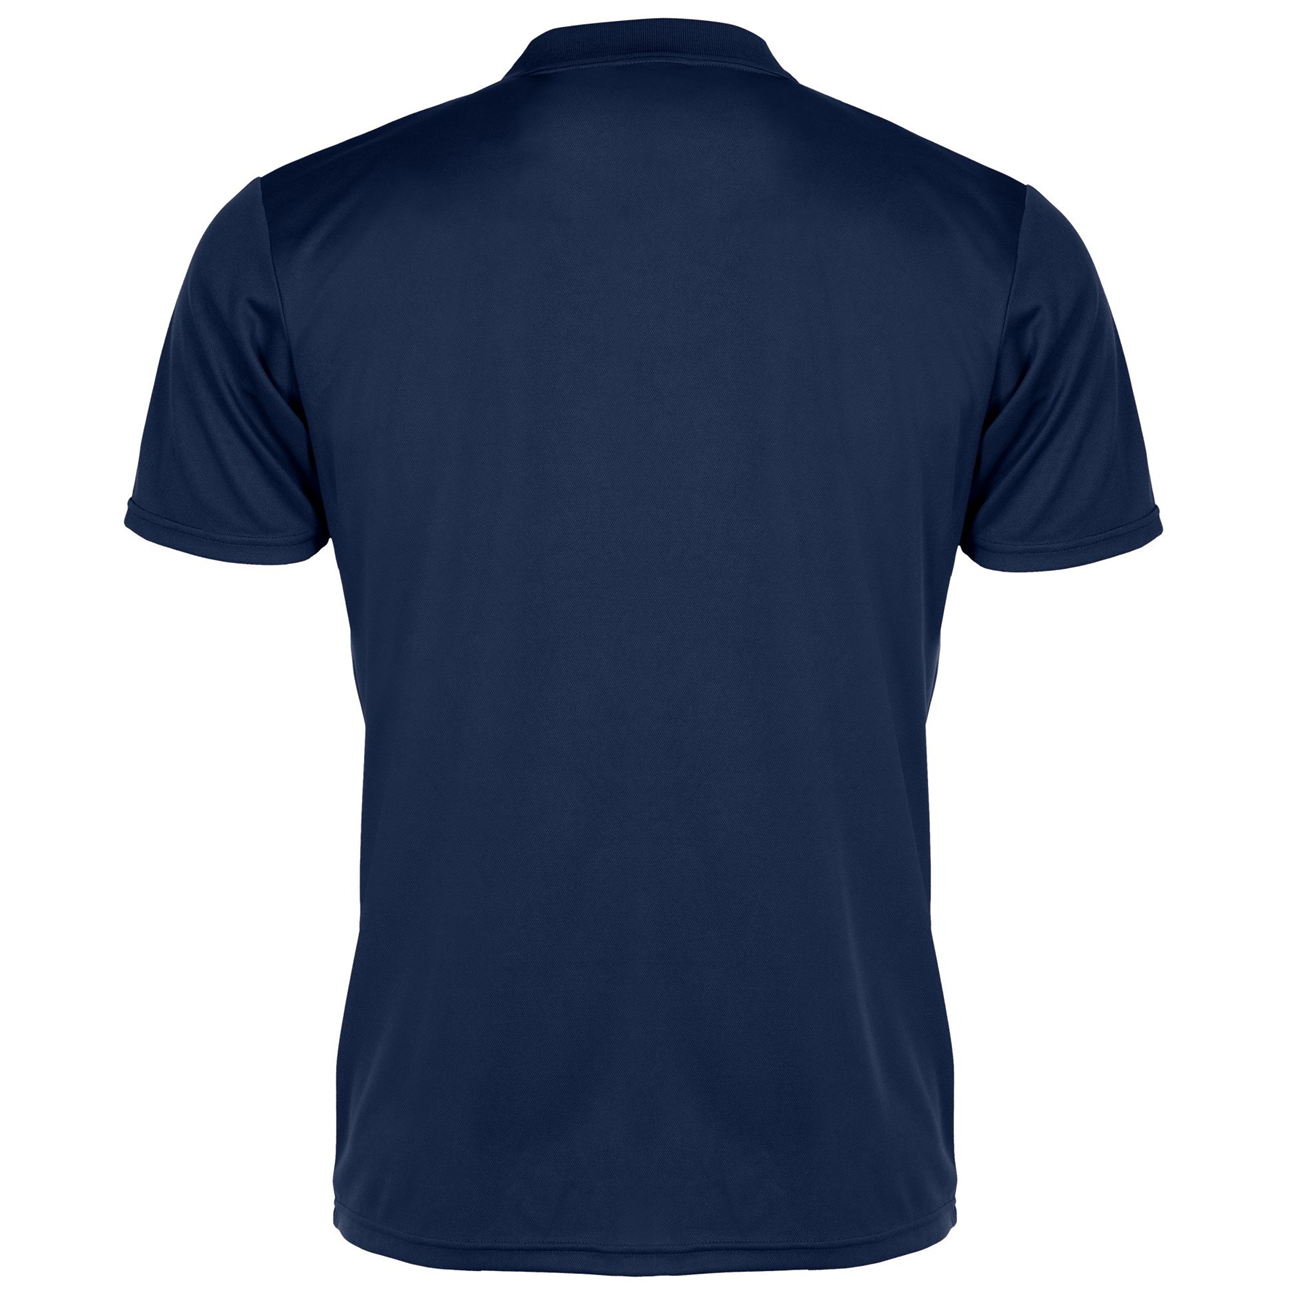 Sedgley & Gornal United FC - Polo Shirt